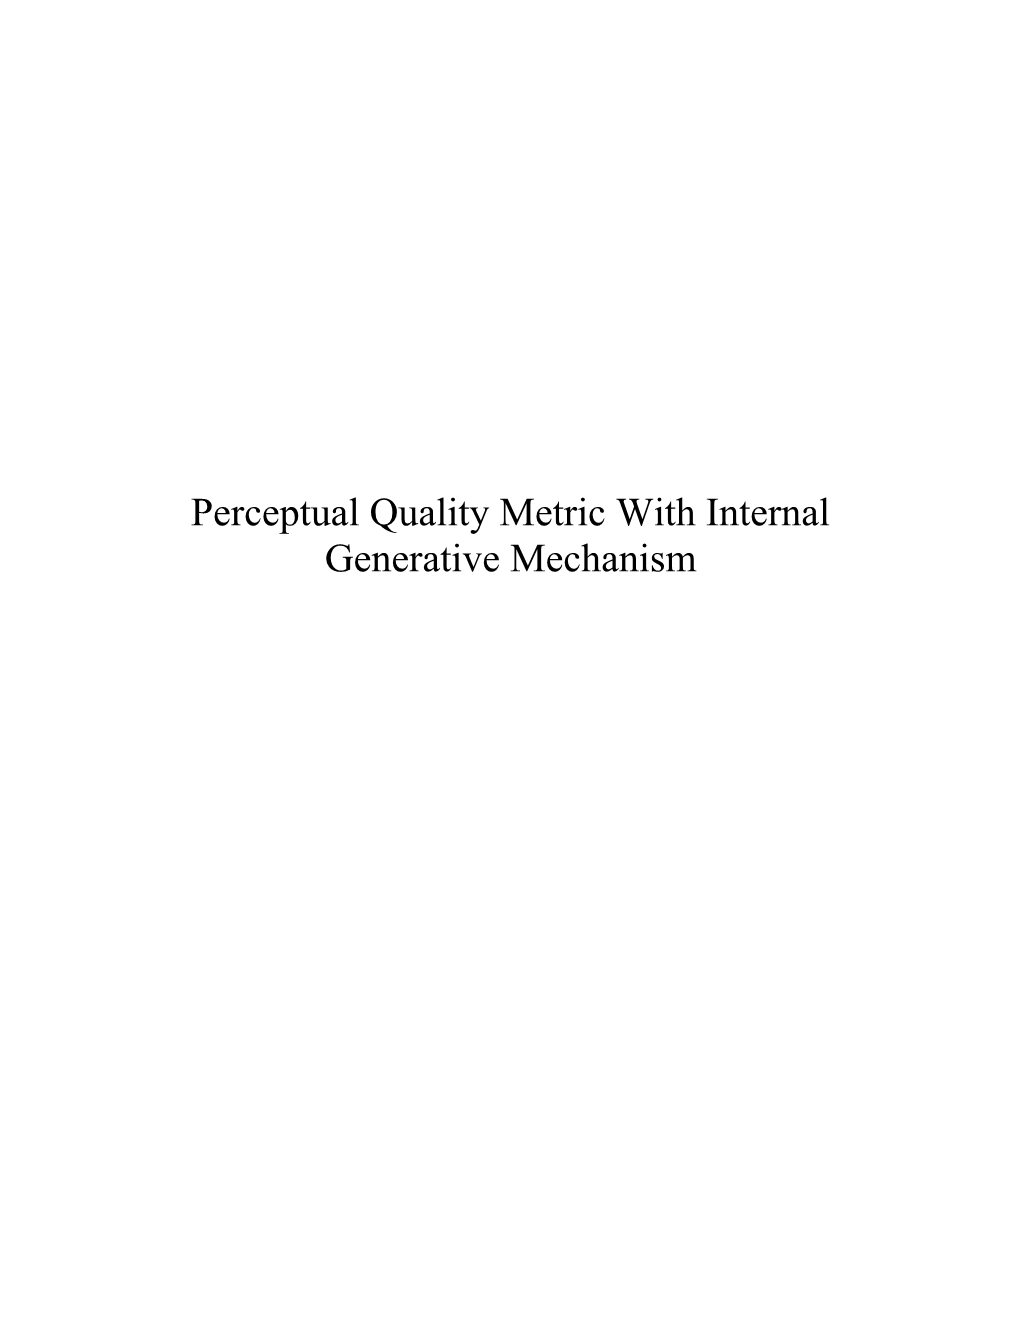 Perceptual Quality Metric with Internal